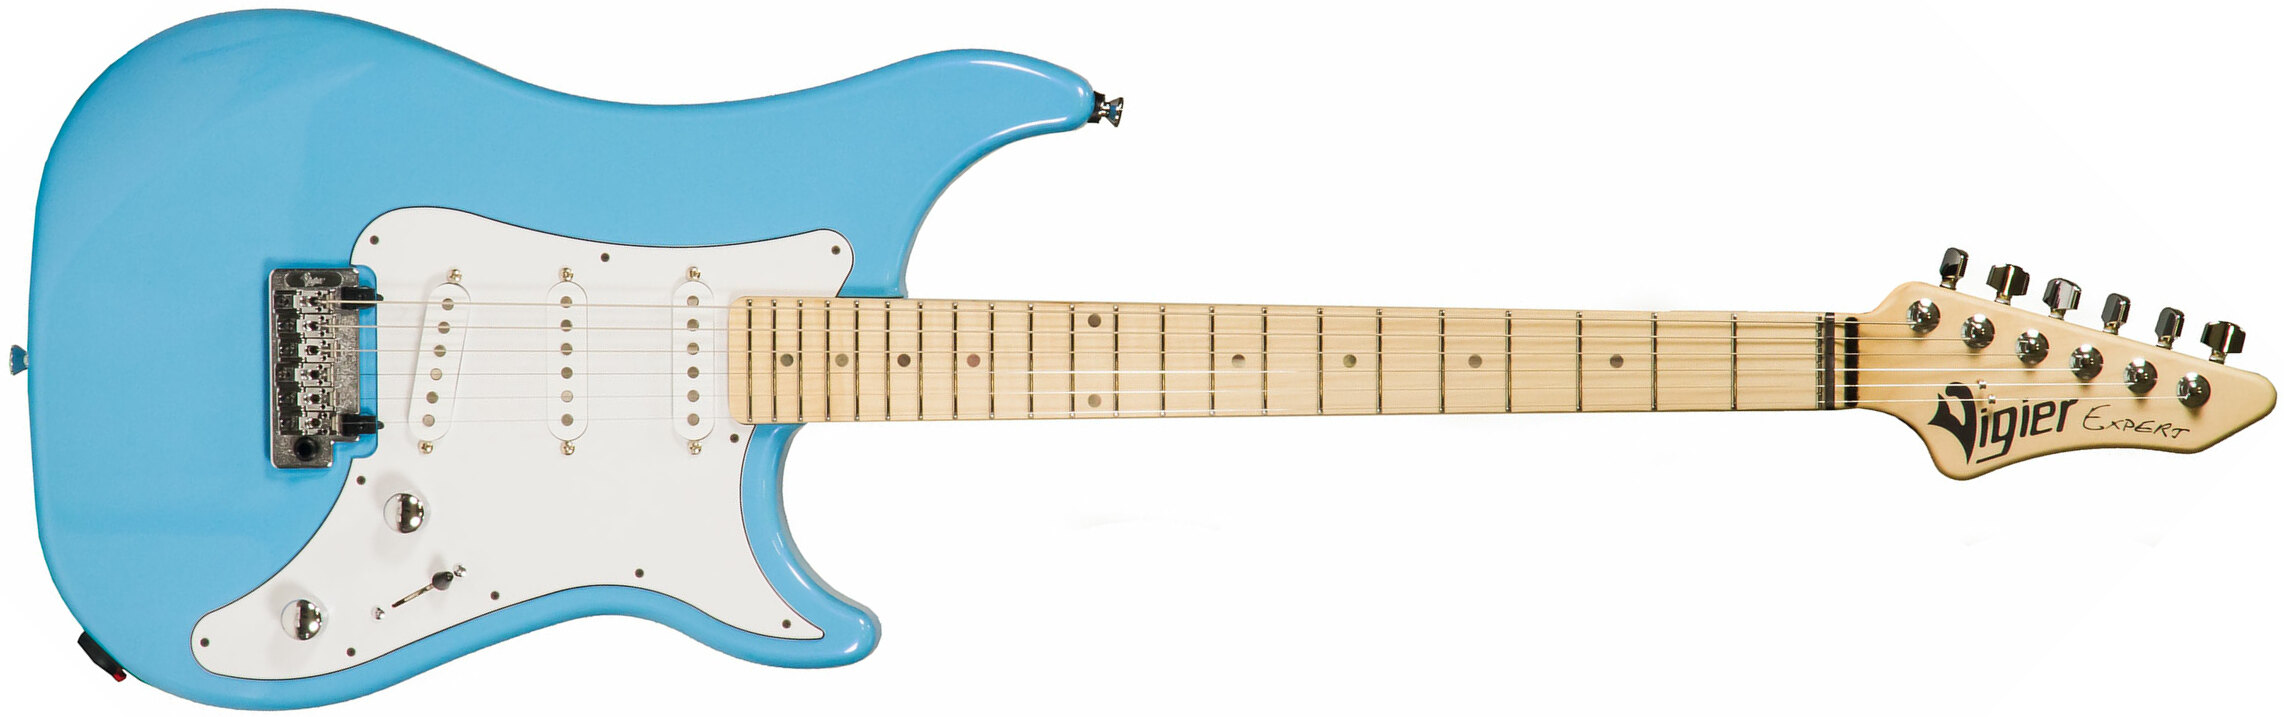 Vigier Expert Classic Rock Sss Trem Mn - Normandie Blue - Elektrische gitaar in Str-vorm - Main picture